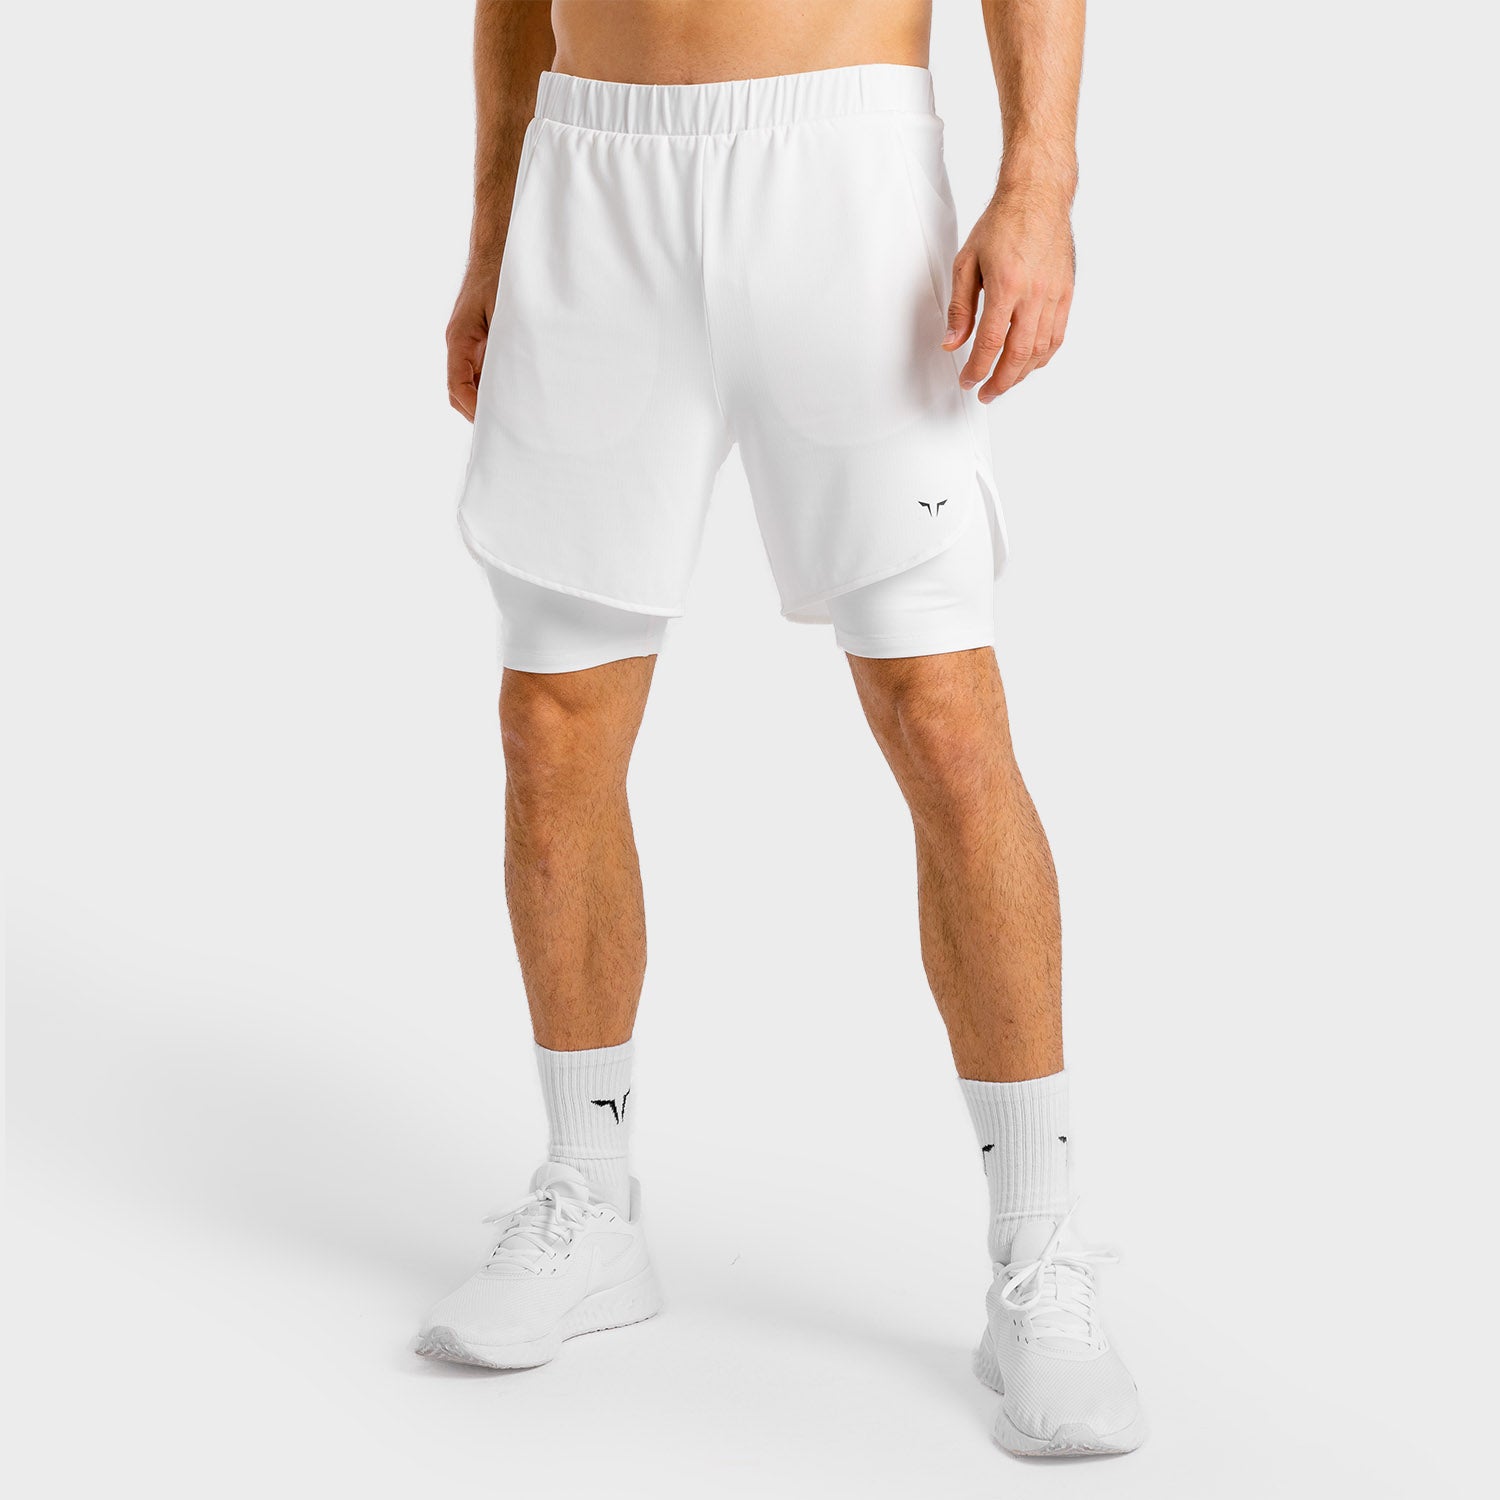 AE | Core Mesh 2-in-1 Shorts - White | Gym Shorts Men | SQUATWOLF